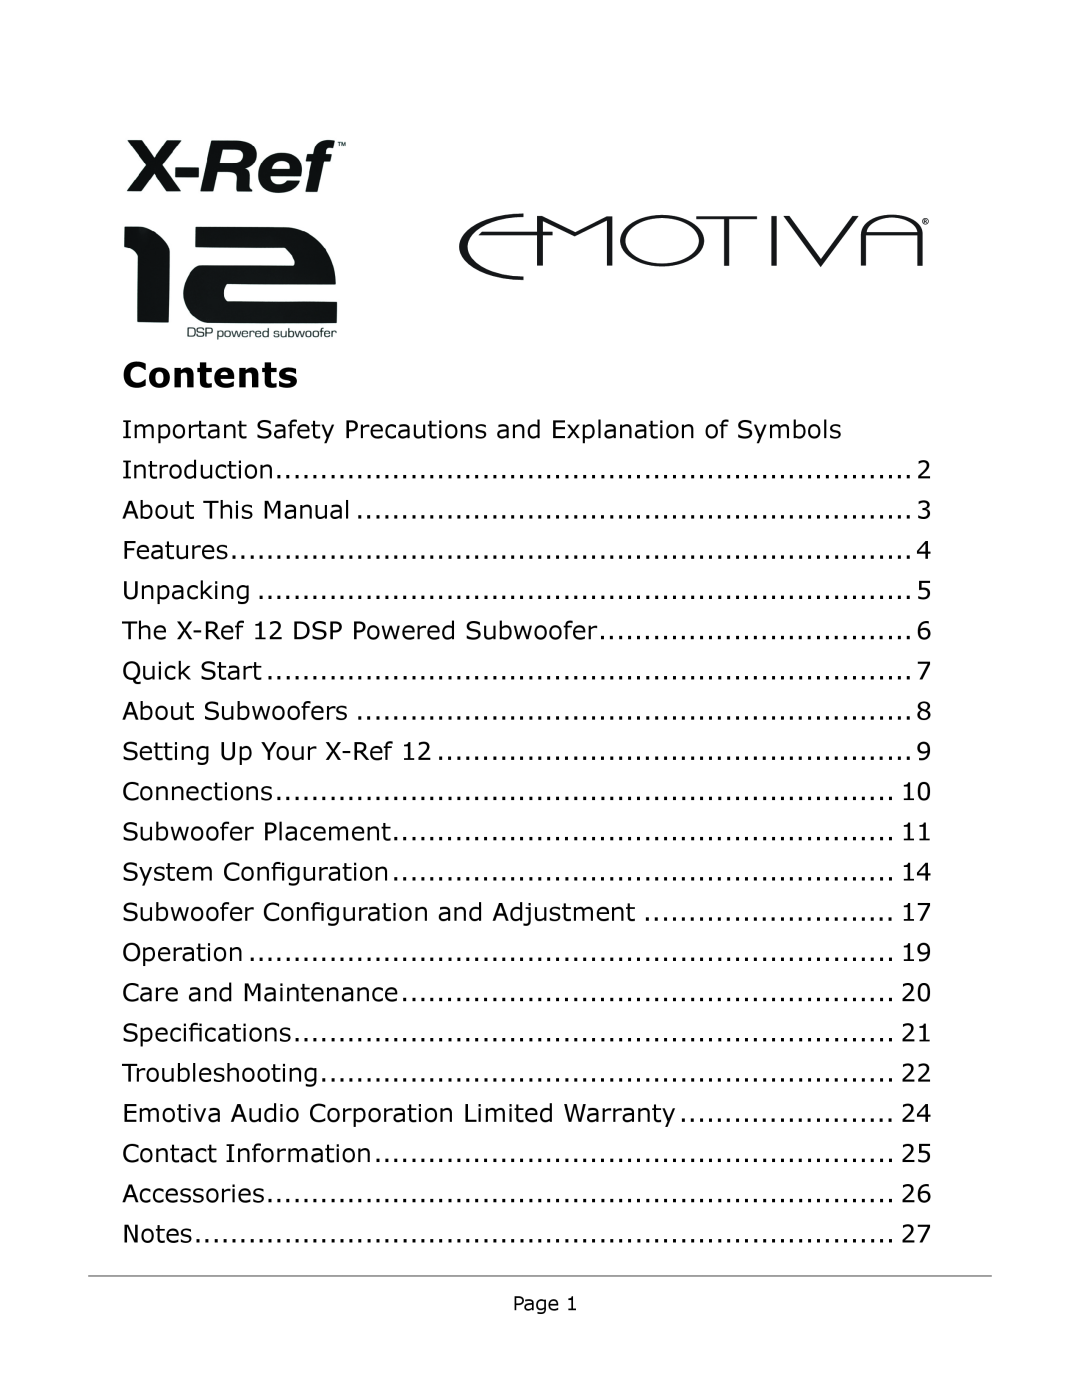 Emotiva X-Ref 12 user manual Contents 